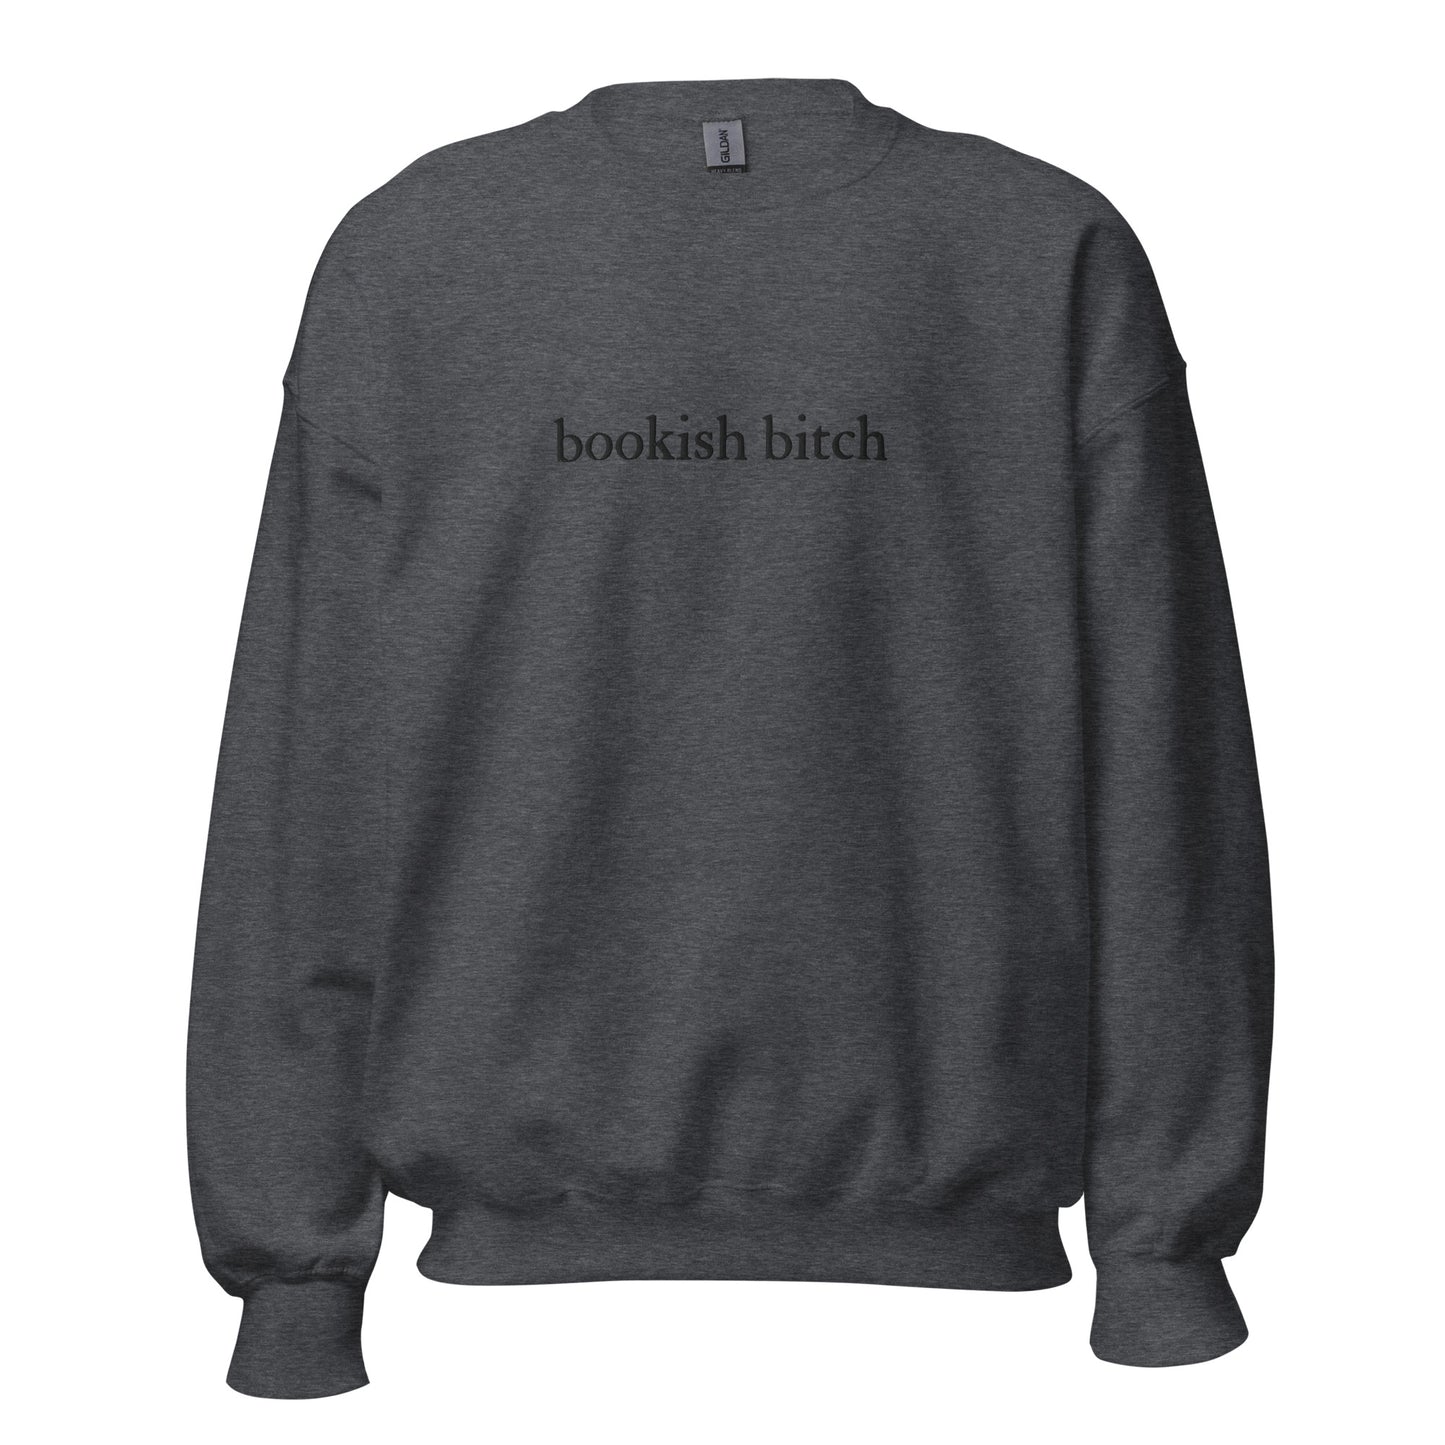 bookish bitch embroidered sweatshirt